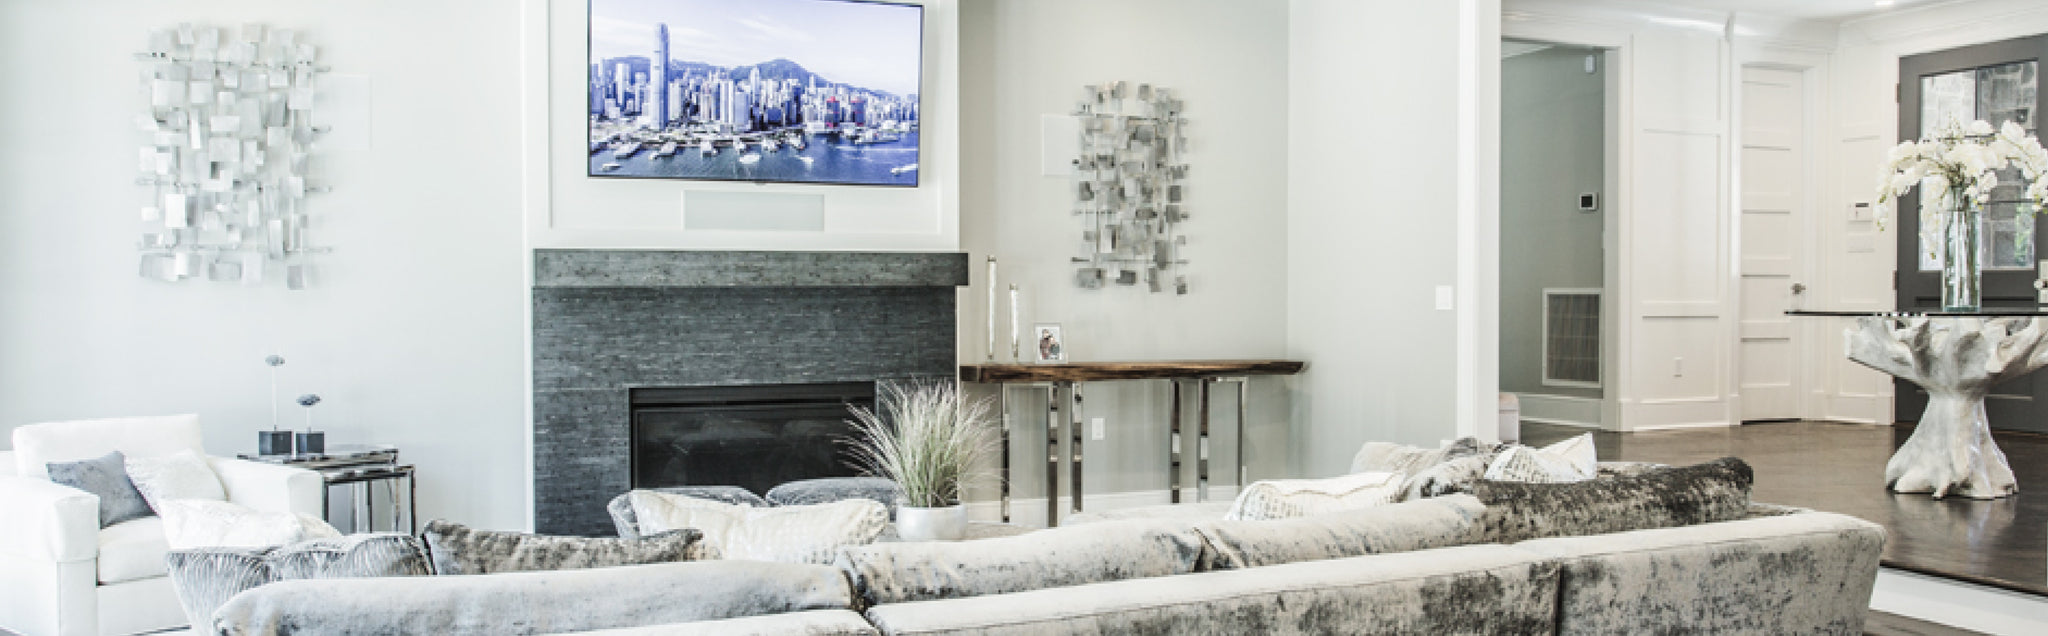 Ocean Blu Designs Locust Valley, New York - Long Island Home Interior Design Project